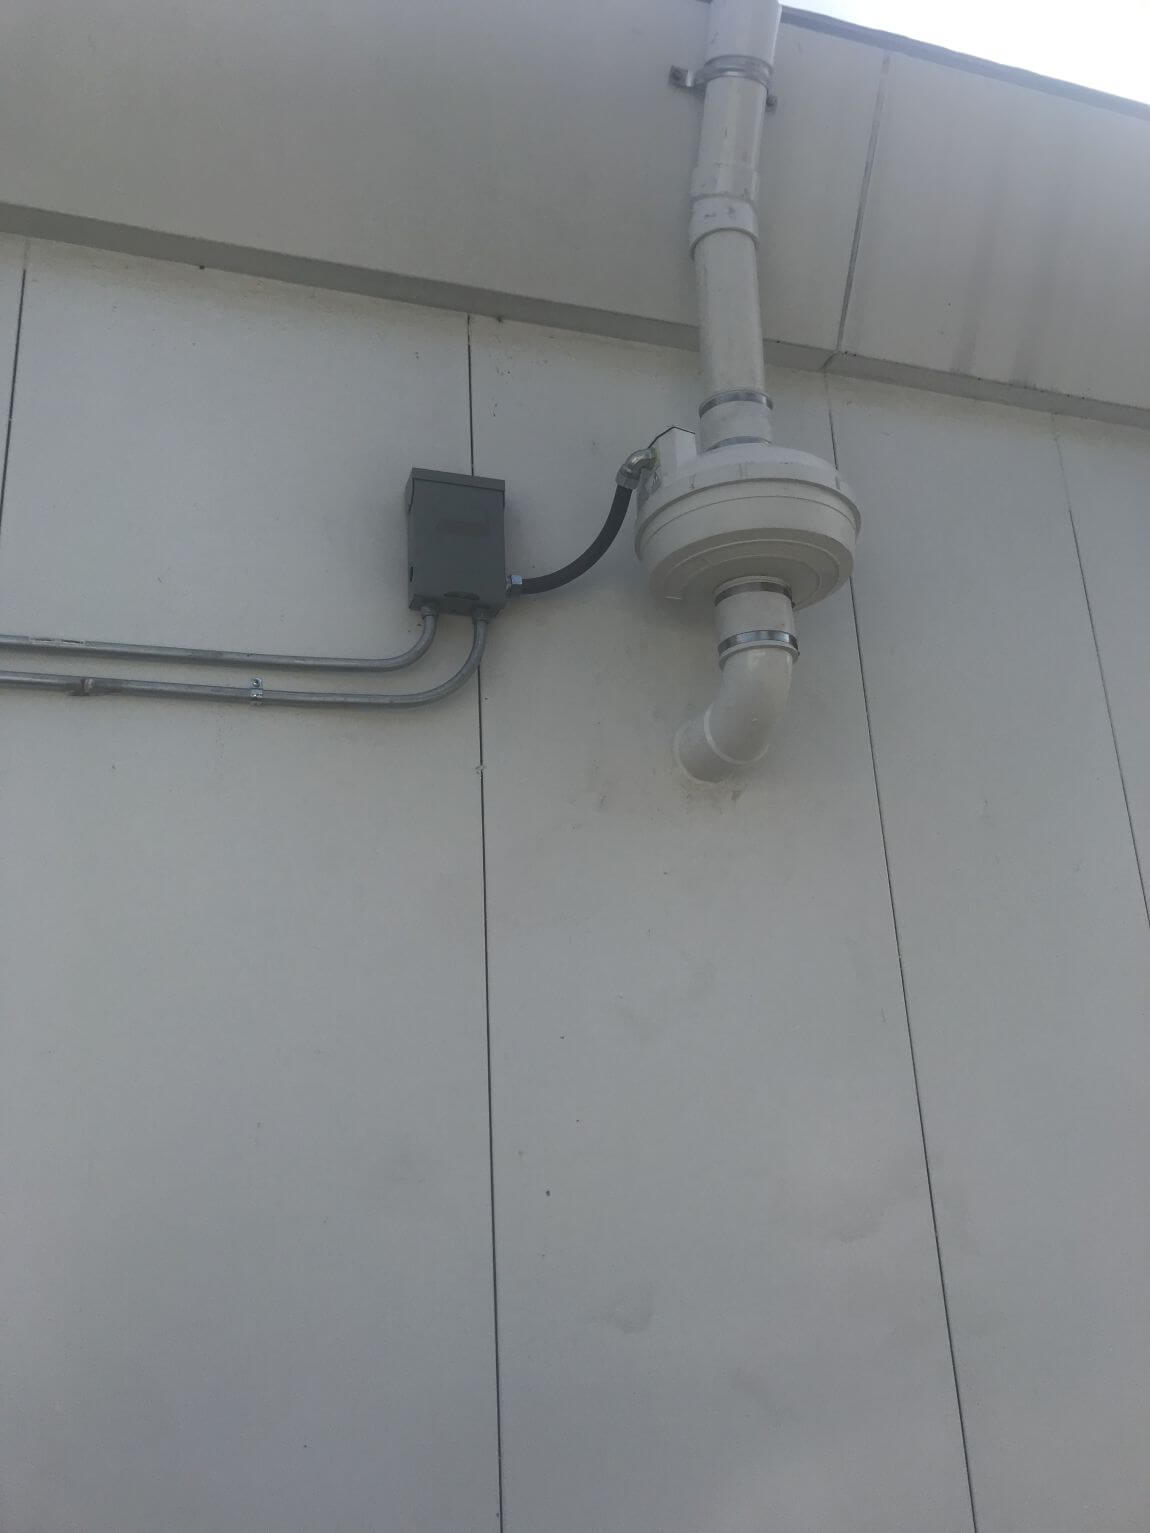 Exterior roof line vent for vapor intrusion mitigation system on home